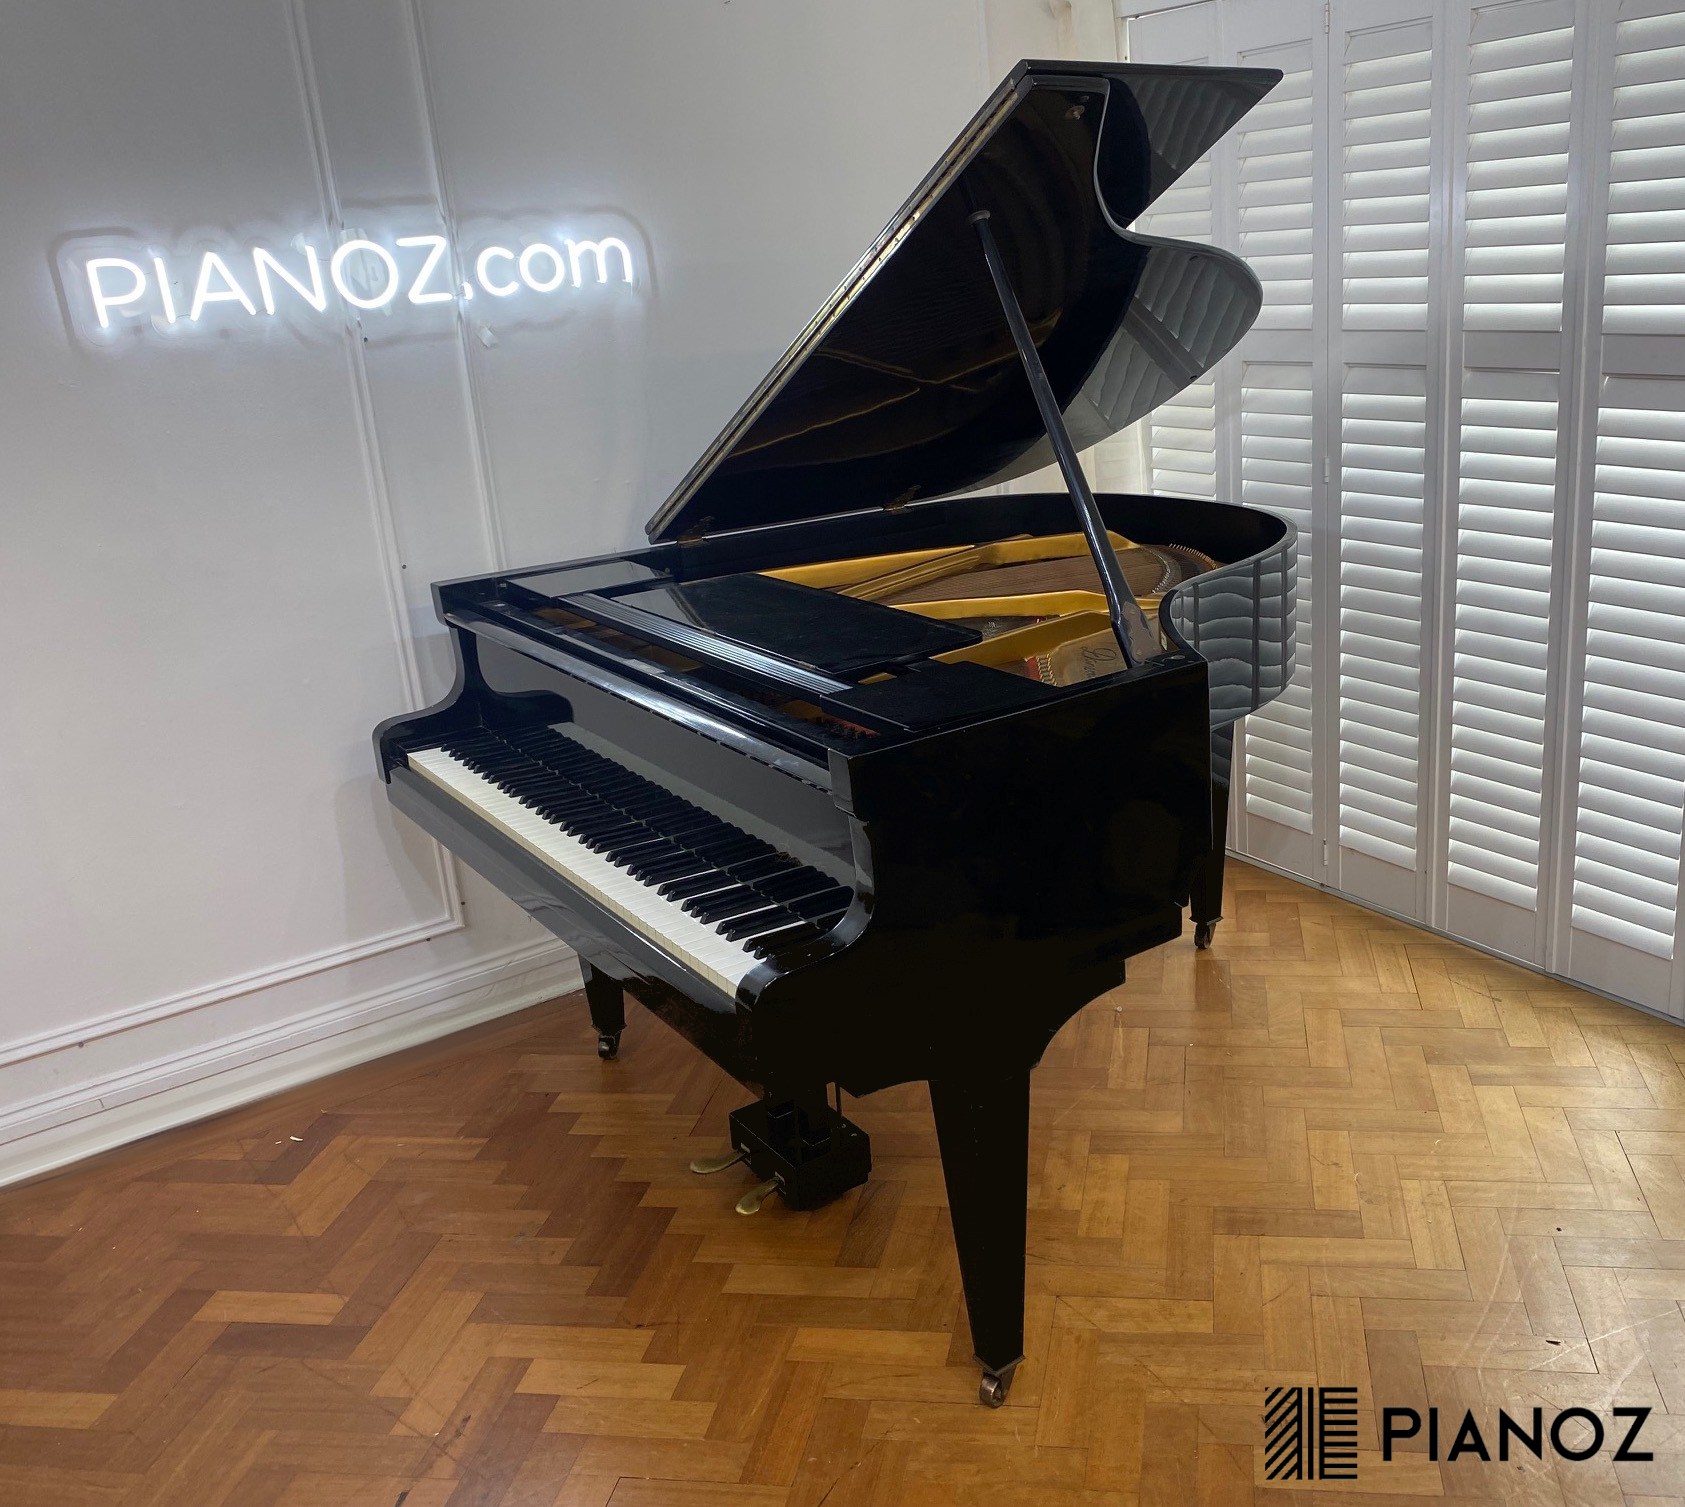 Danemann Black High Gloss Baby Grand Piano piano for sale in UK